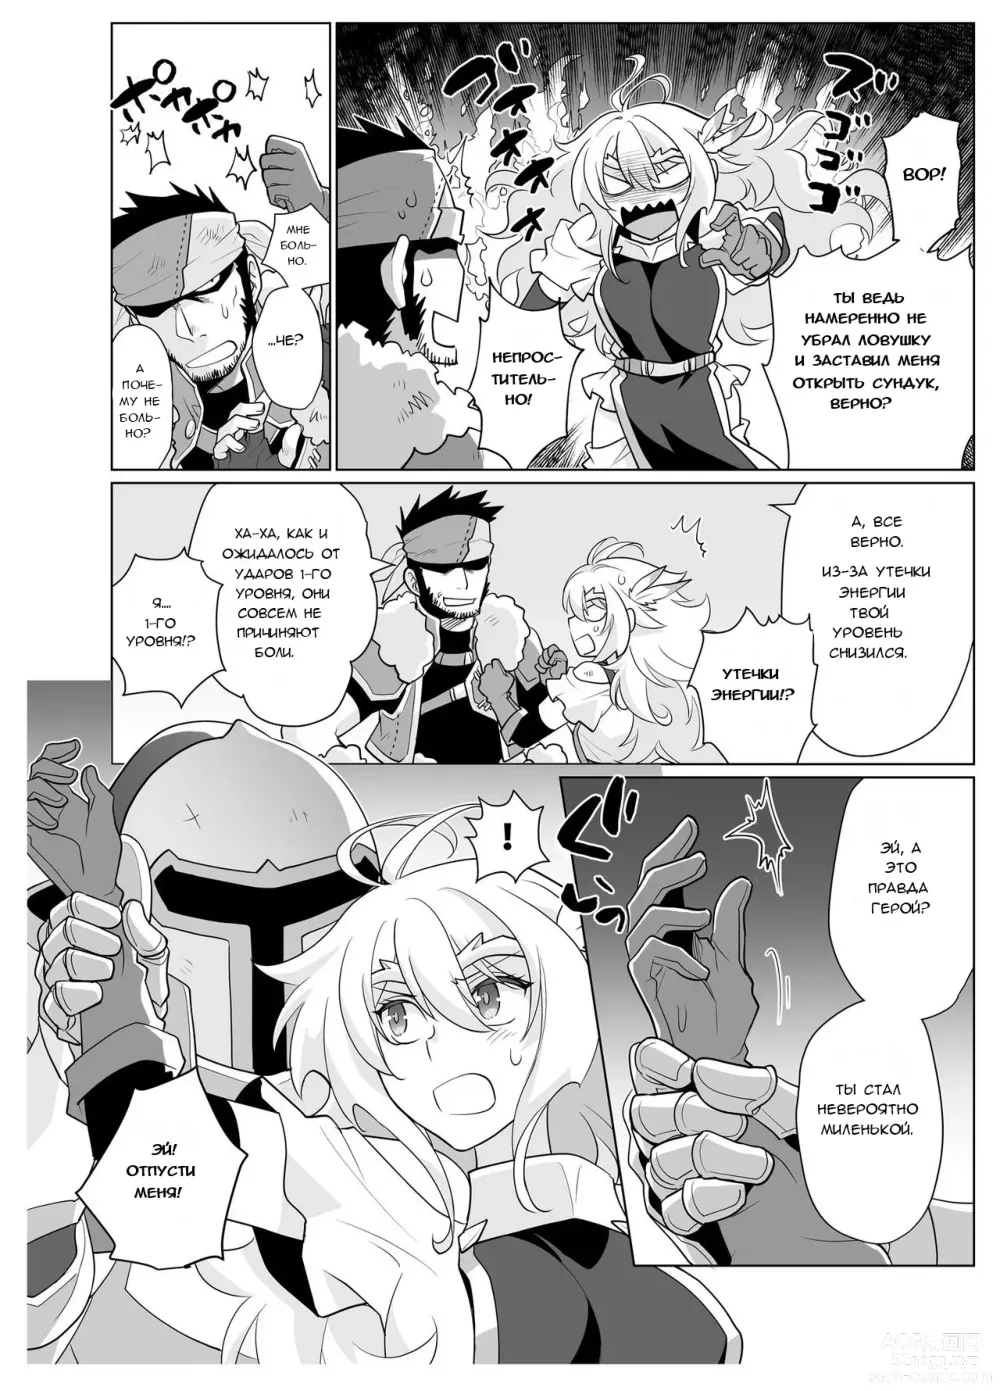 Page 9 of doujinshi Становление герой-чан 1-го уровня